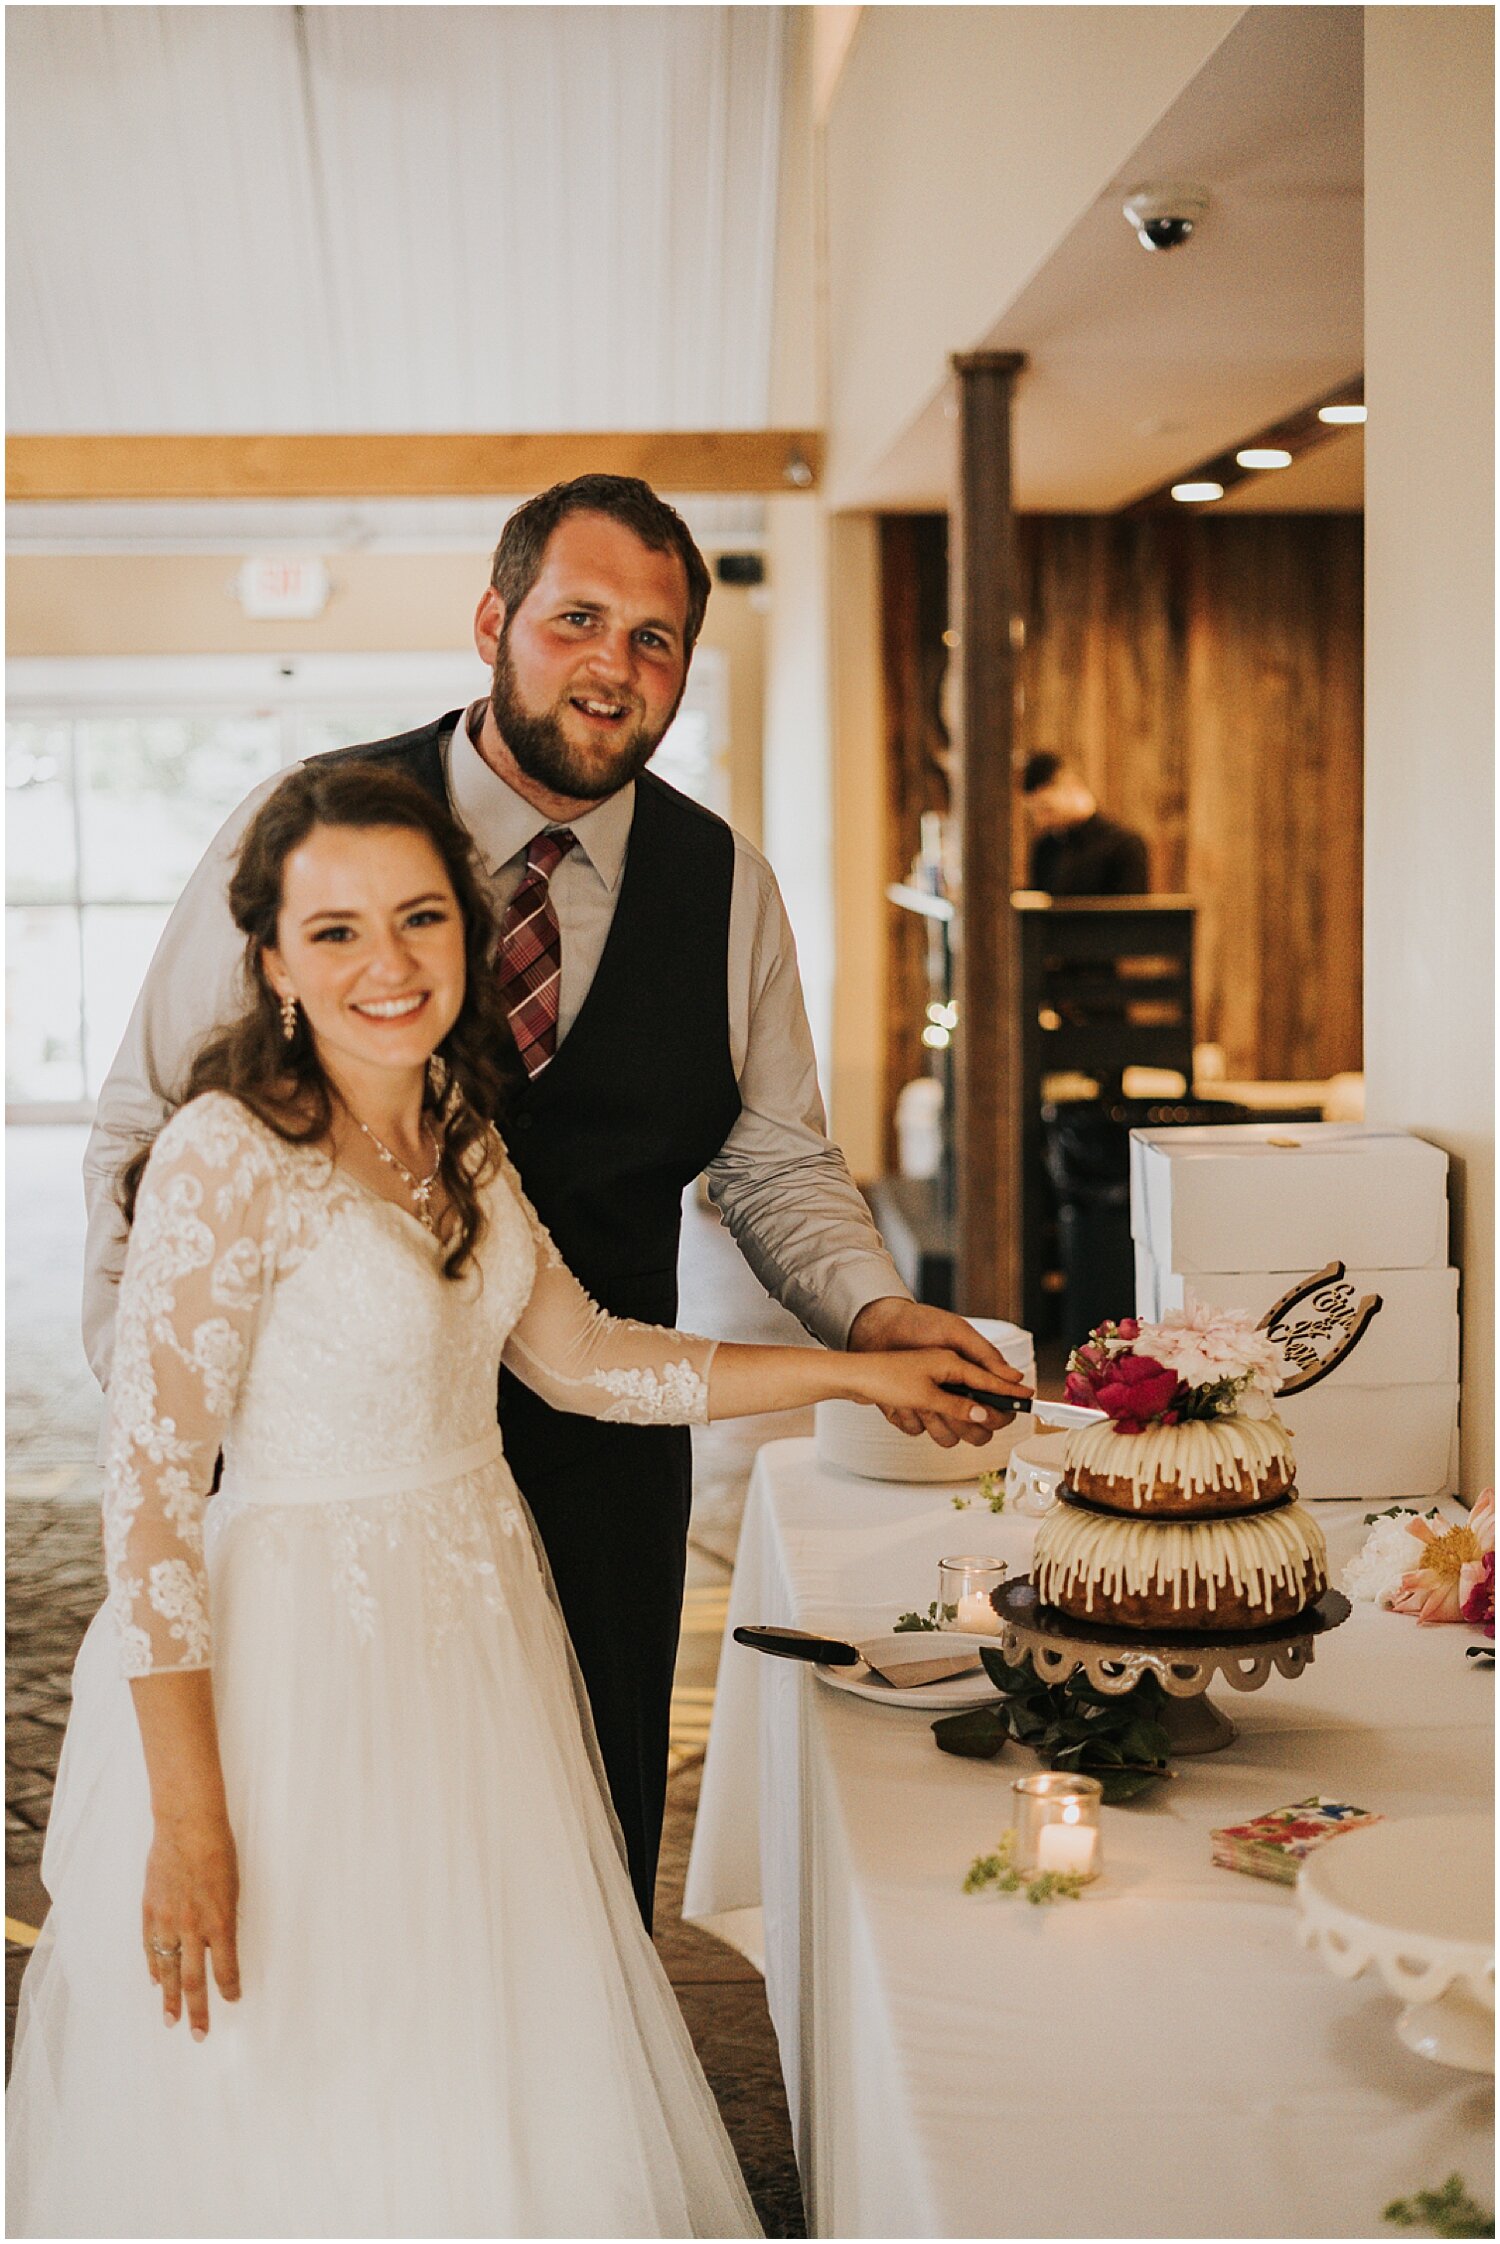  bride and groom cut their wedding cake 